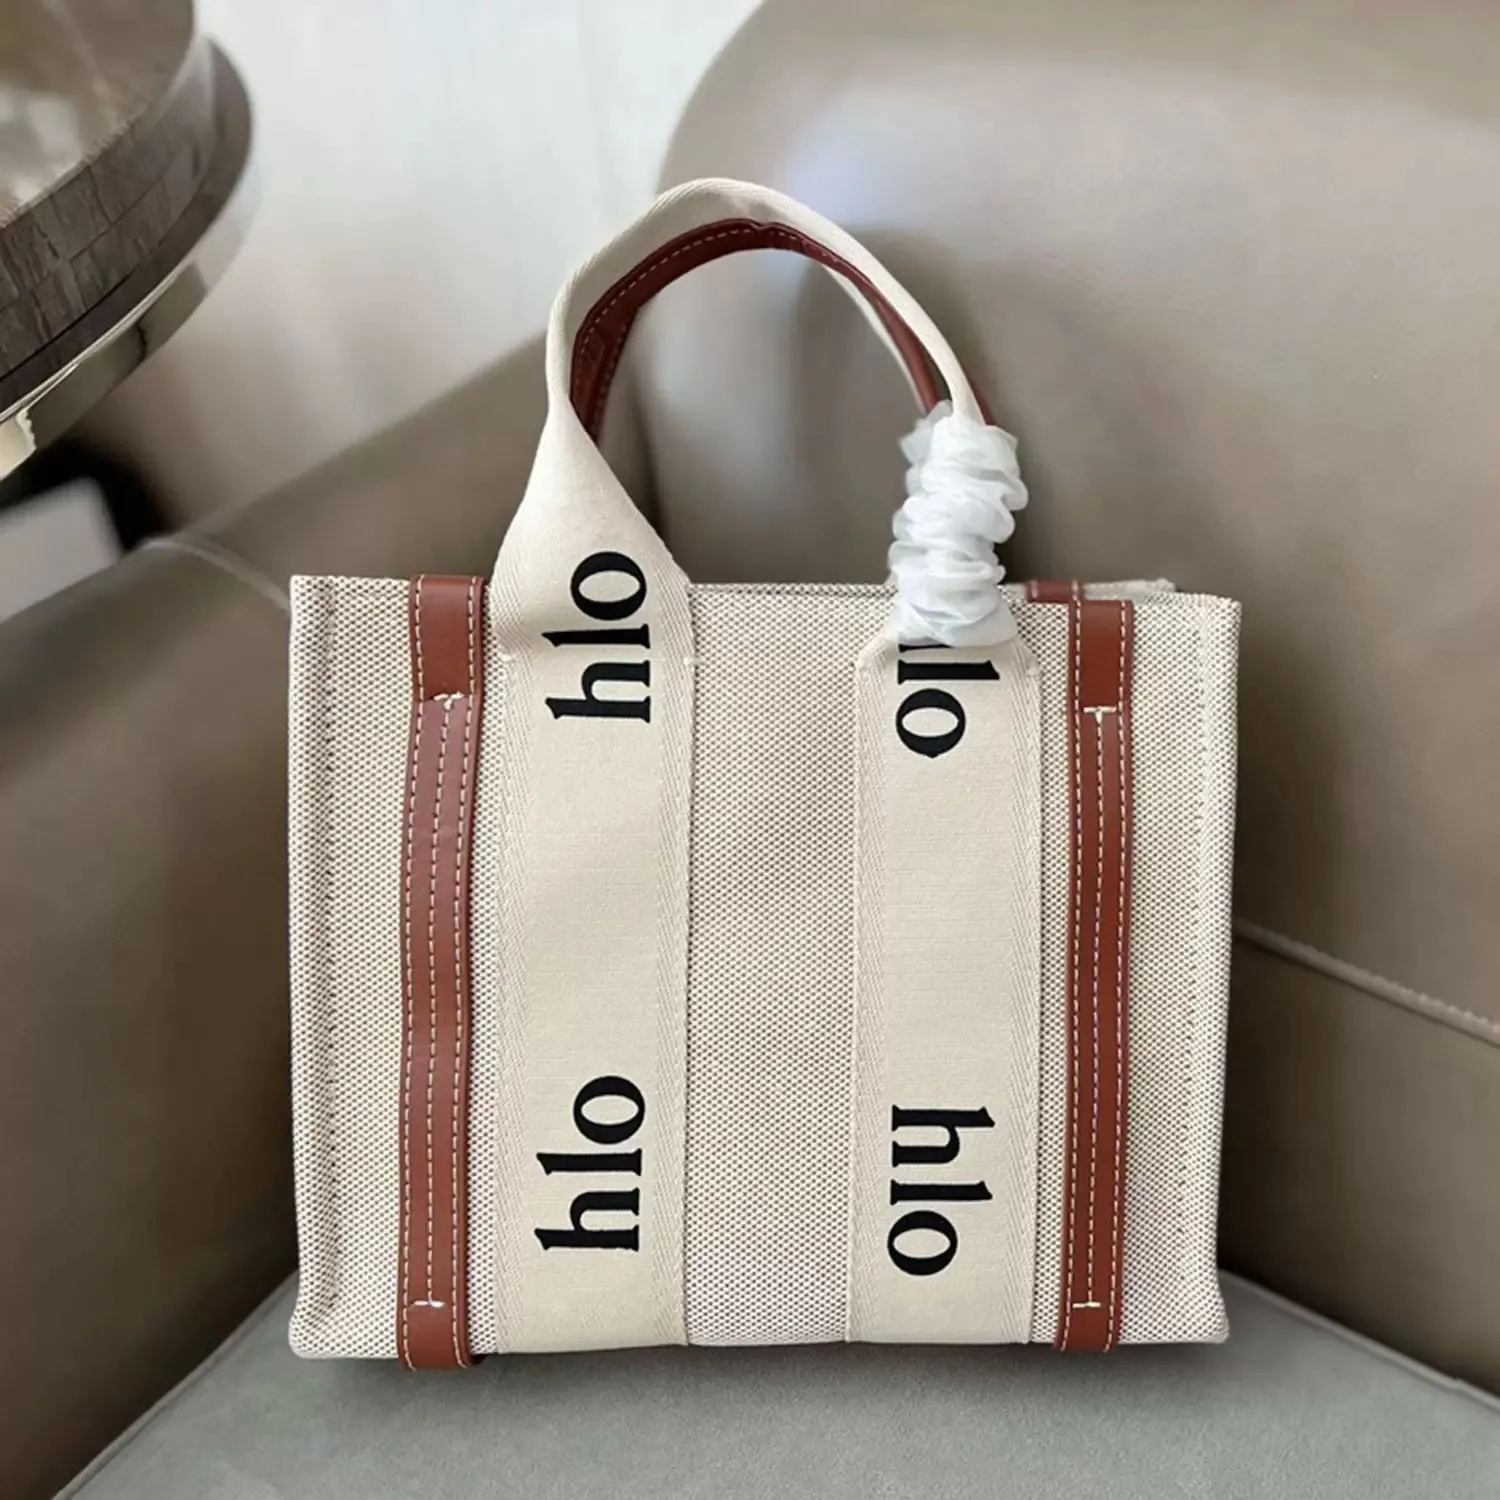 Premium Ladies Handbag Shopping Bag Fashion Linen Large Beach Bag1 Luxury Designer Travel Messenger Shoulder Bag0 Wallet